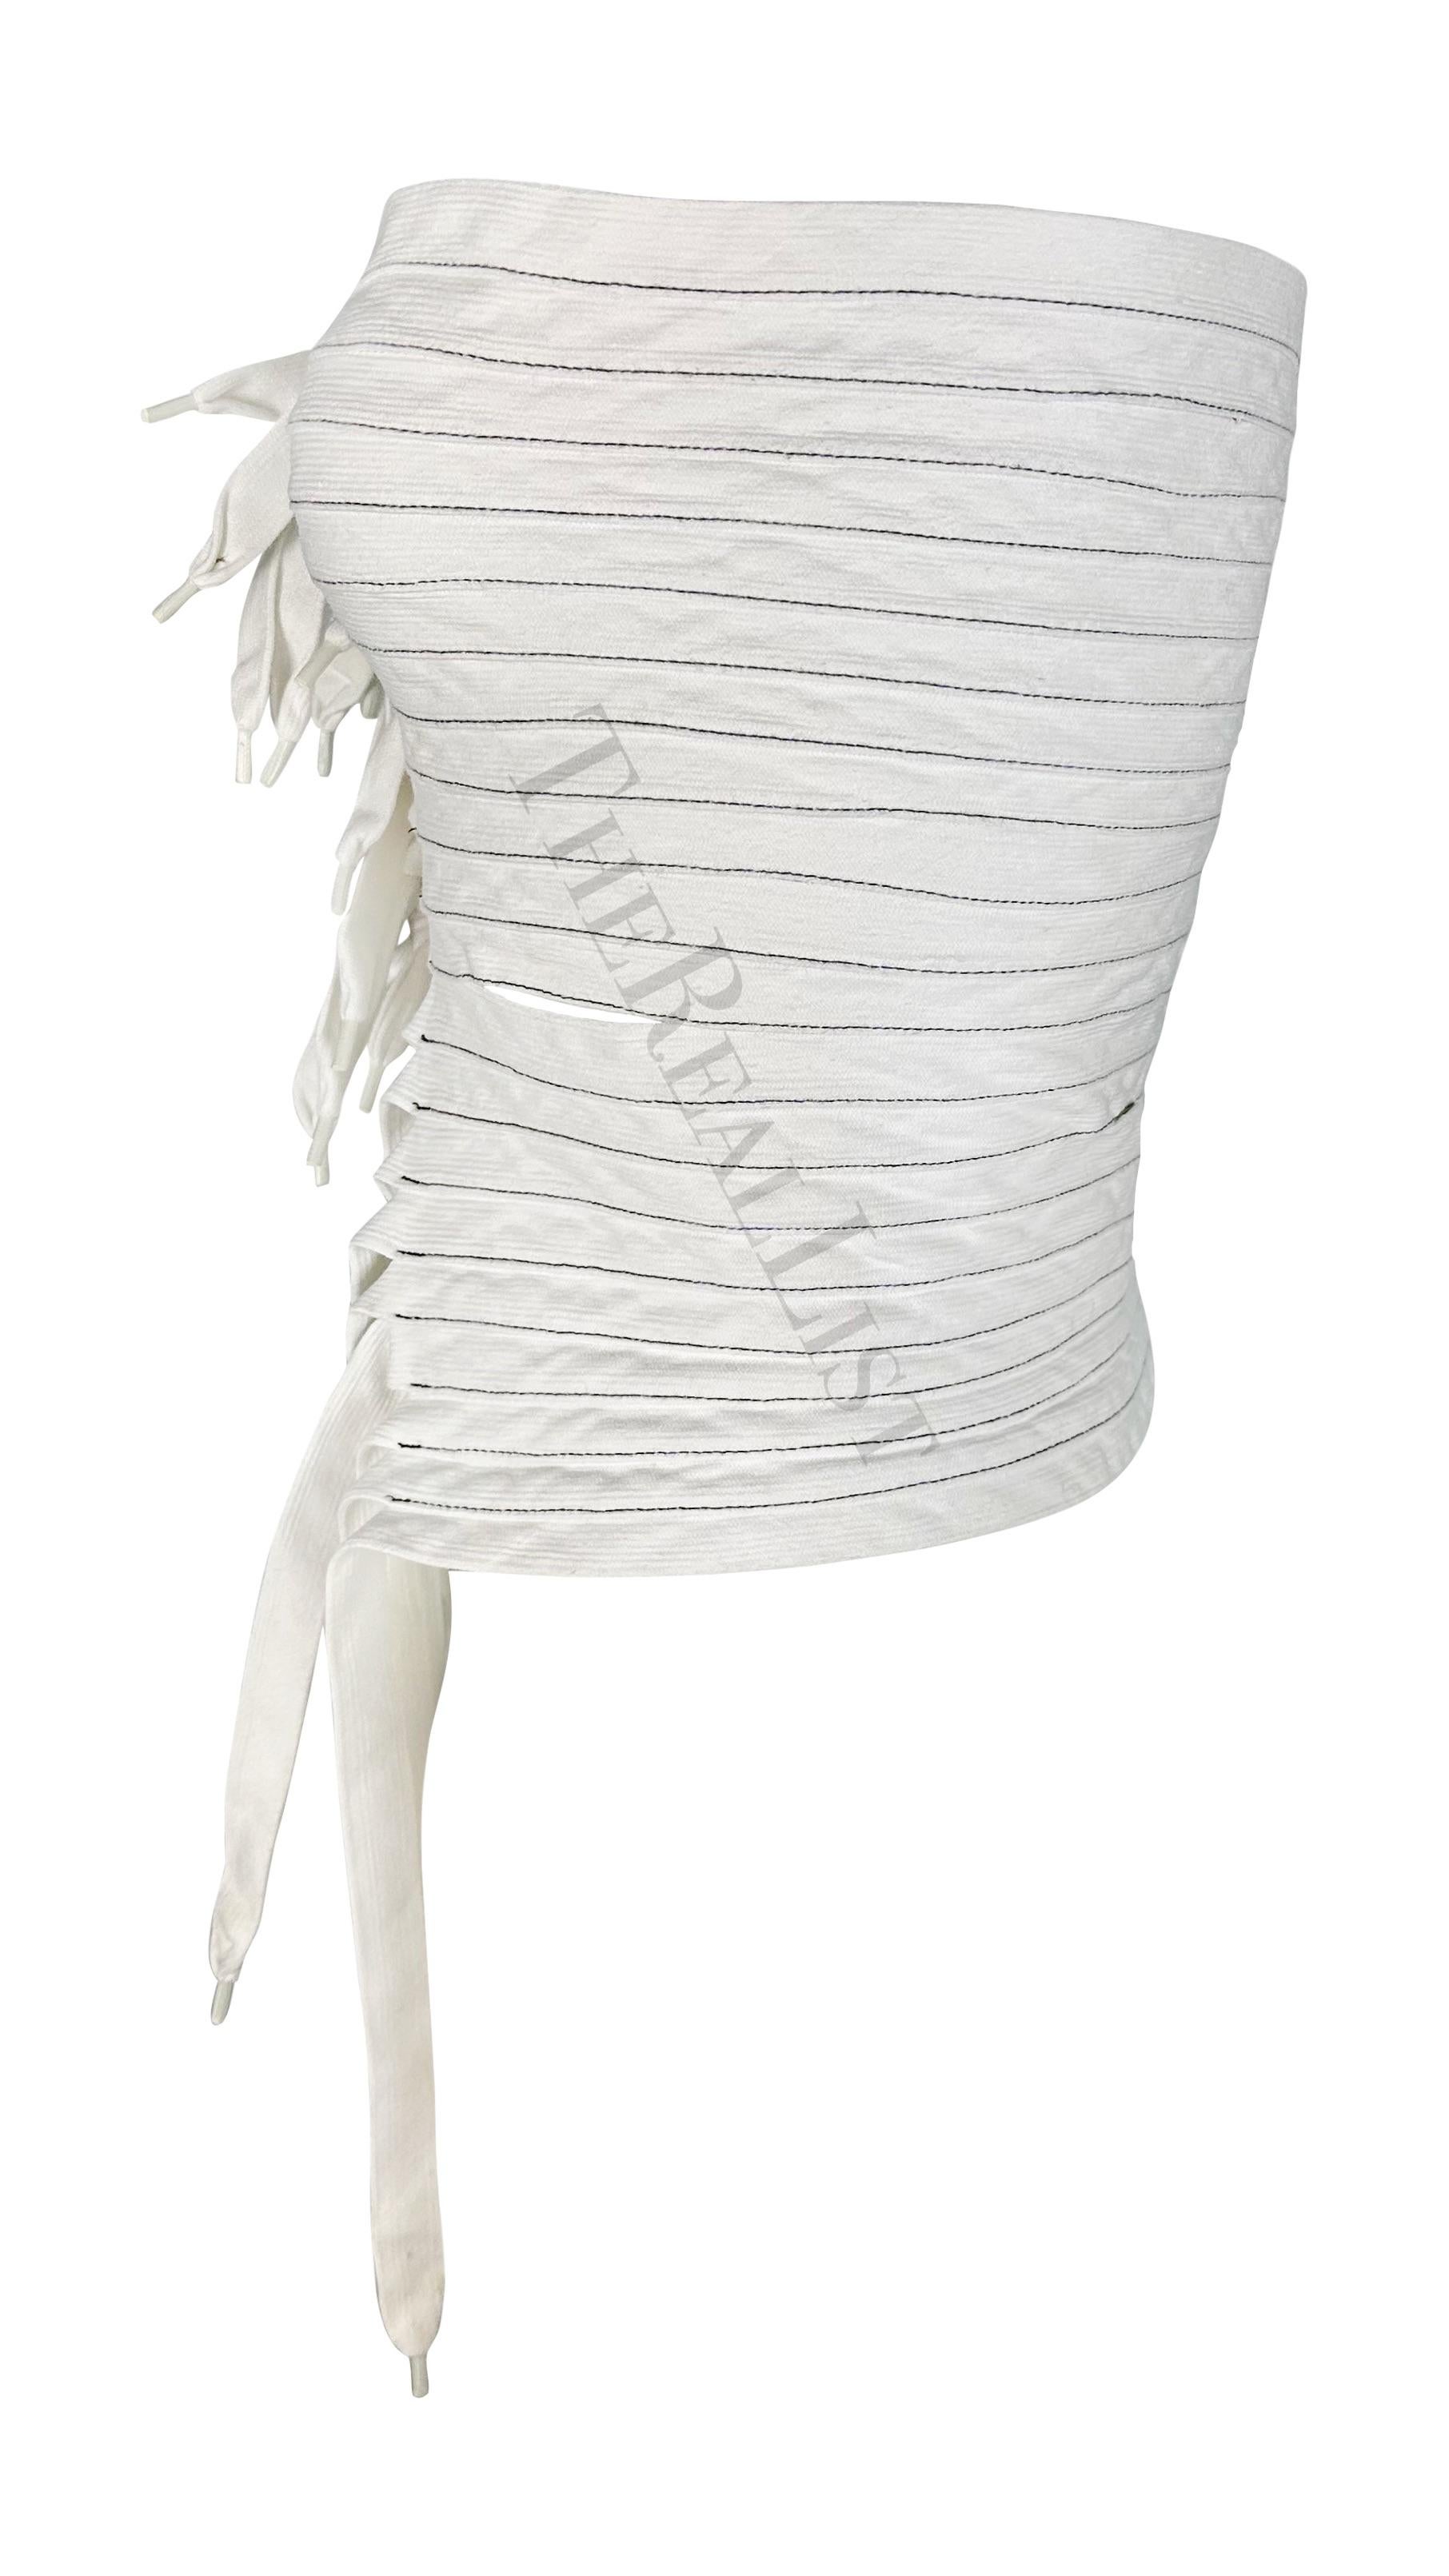 S/S 2004 Margiela Haute Couture Artisanal Repurposed Shoelace White Crop Top  1